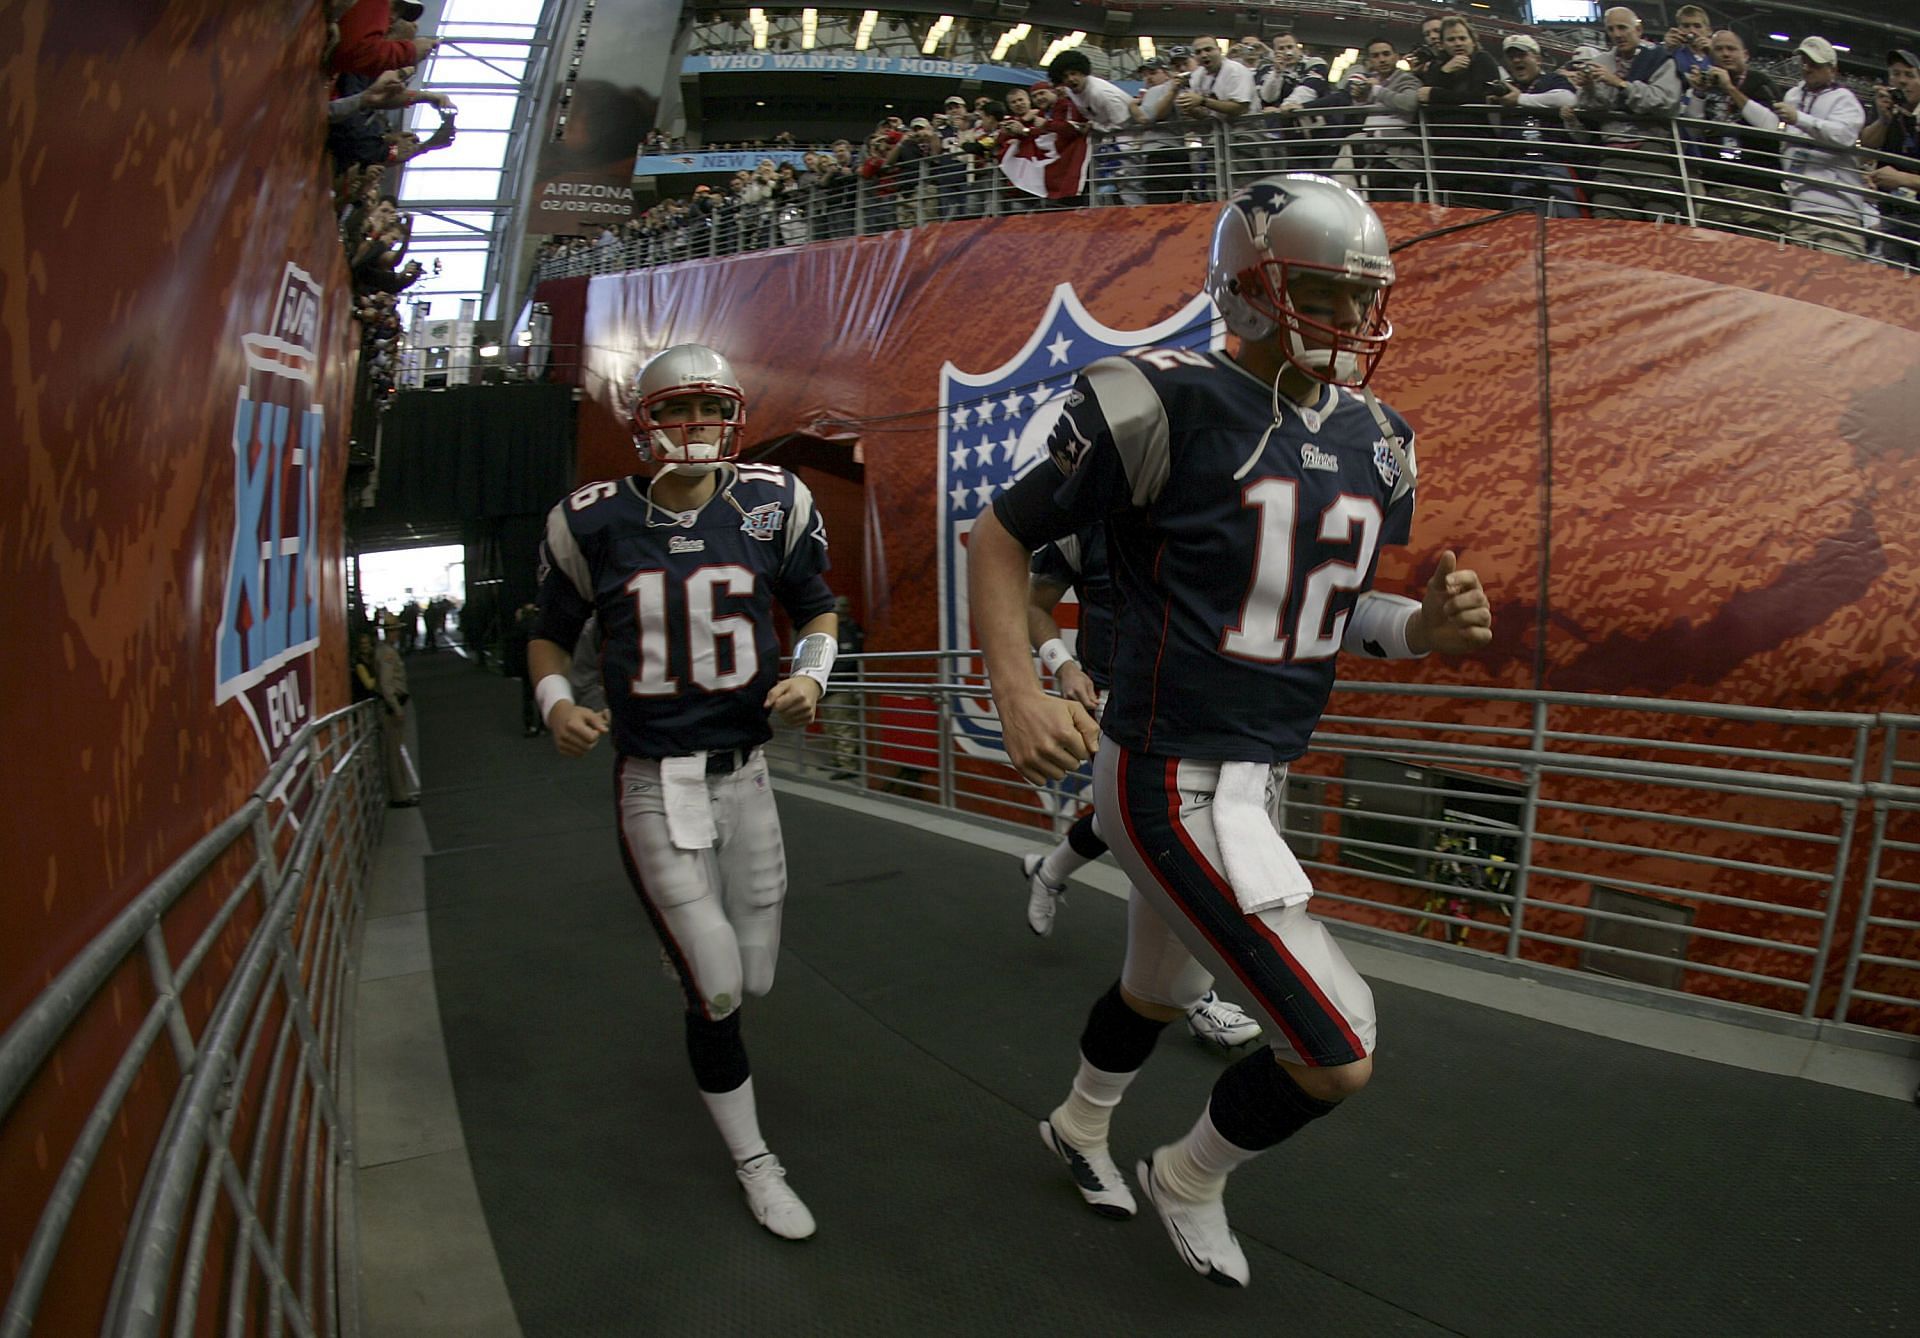 Quarterbacks Tom Brady and Matt Cassel at Super Bowl XLII